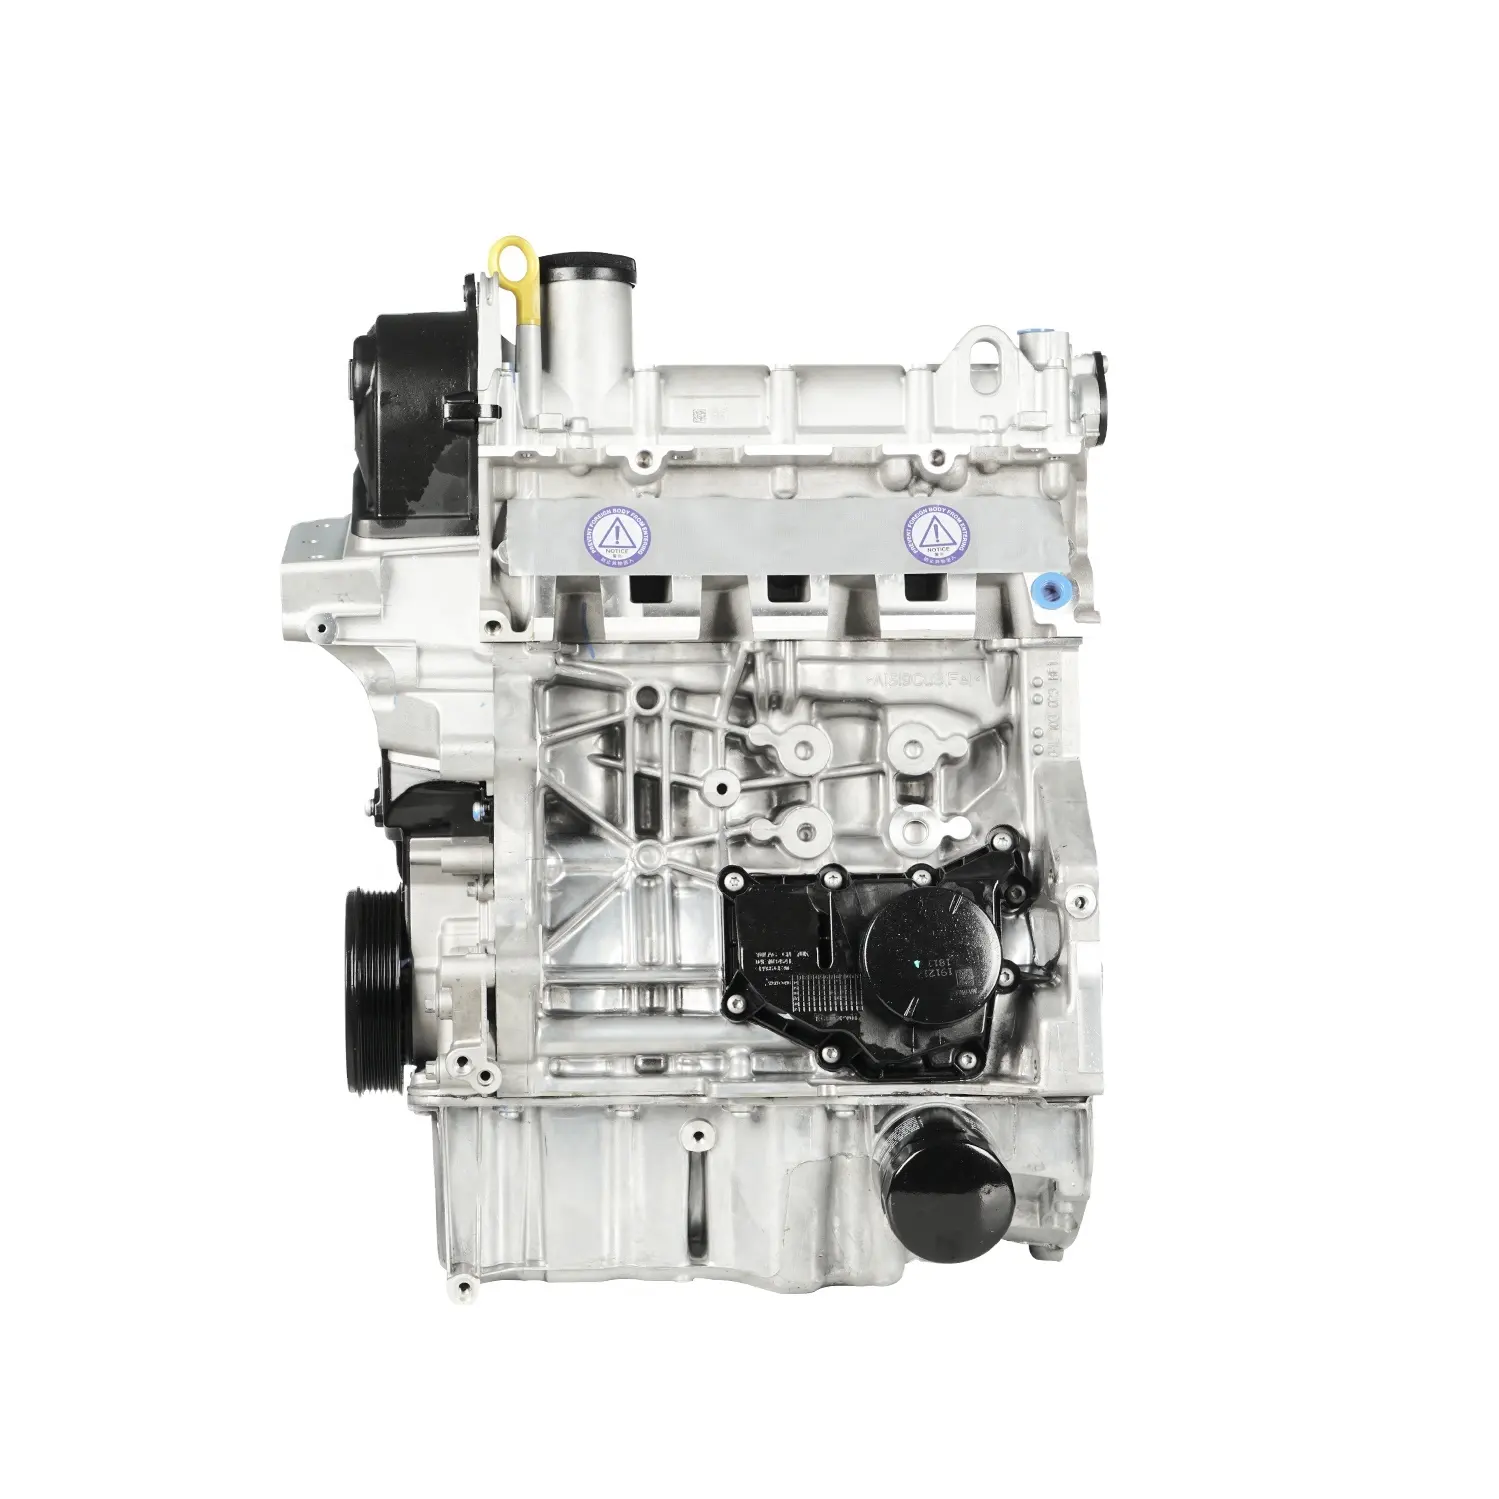 Automotor-Zylinderkopf EA211 CKA 1,4 L Aluminium für JETTA SANTANA POLO